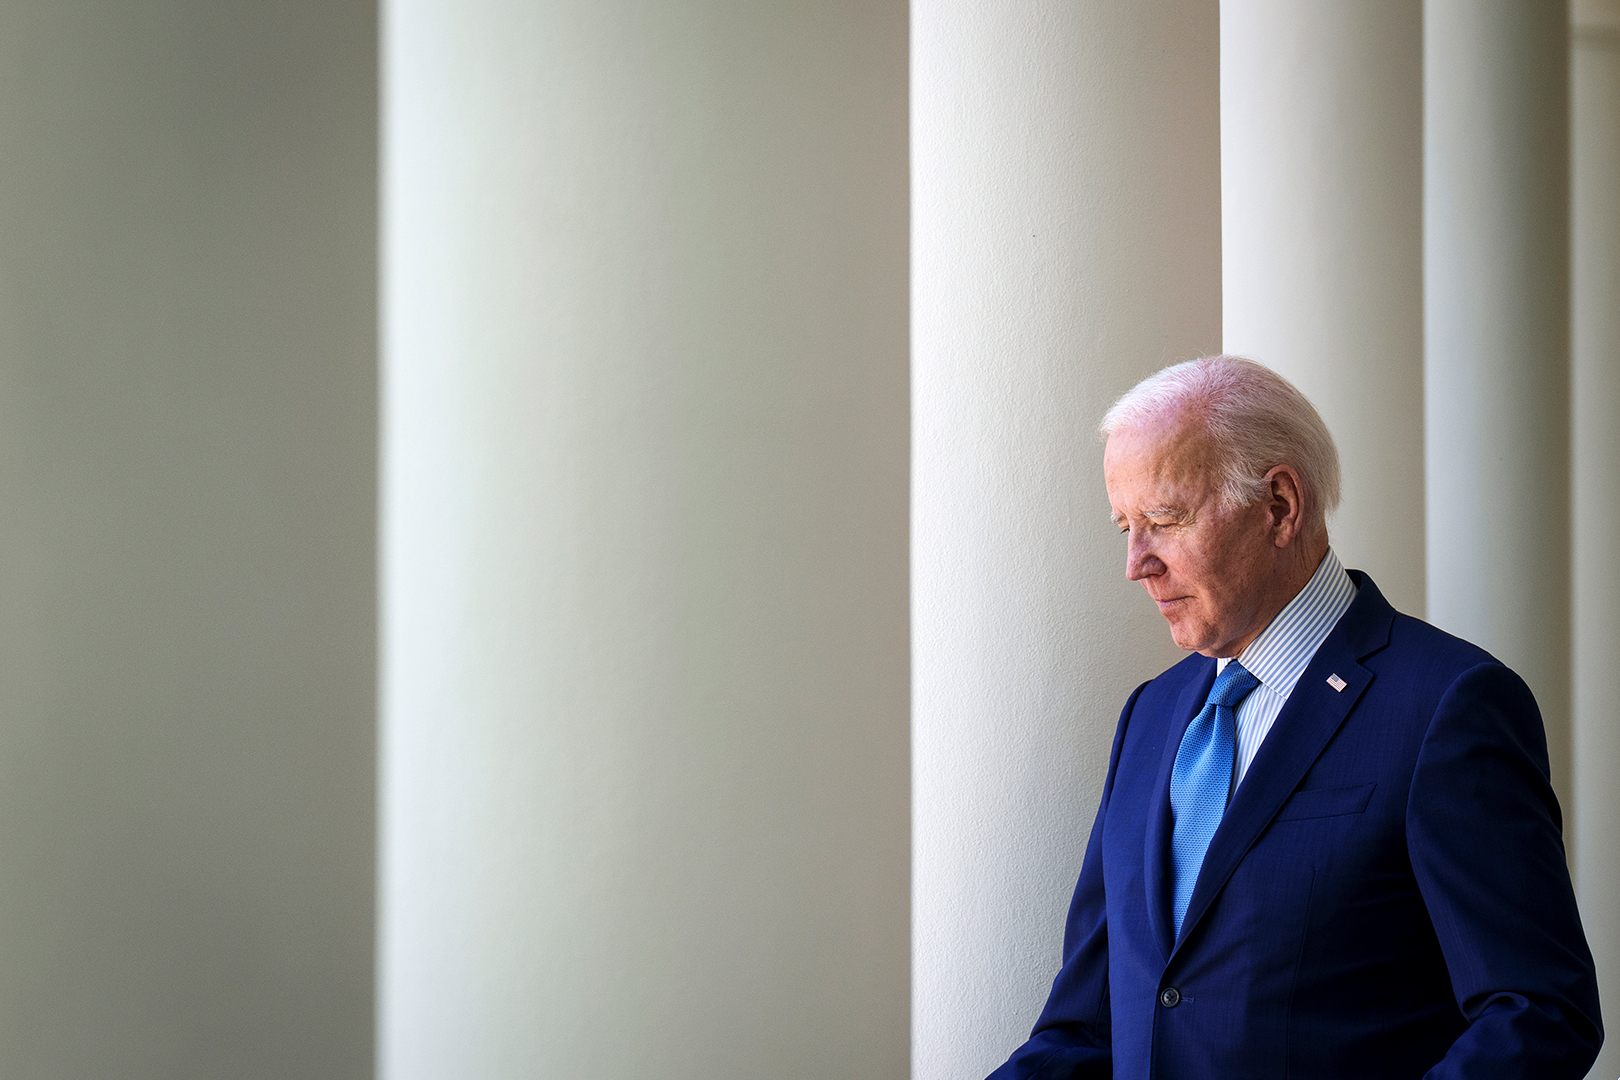 President Joe Biden arrives for an event in the Rose Garden of the White House April 21, 2023 in Washington, DC.